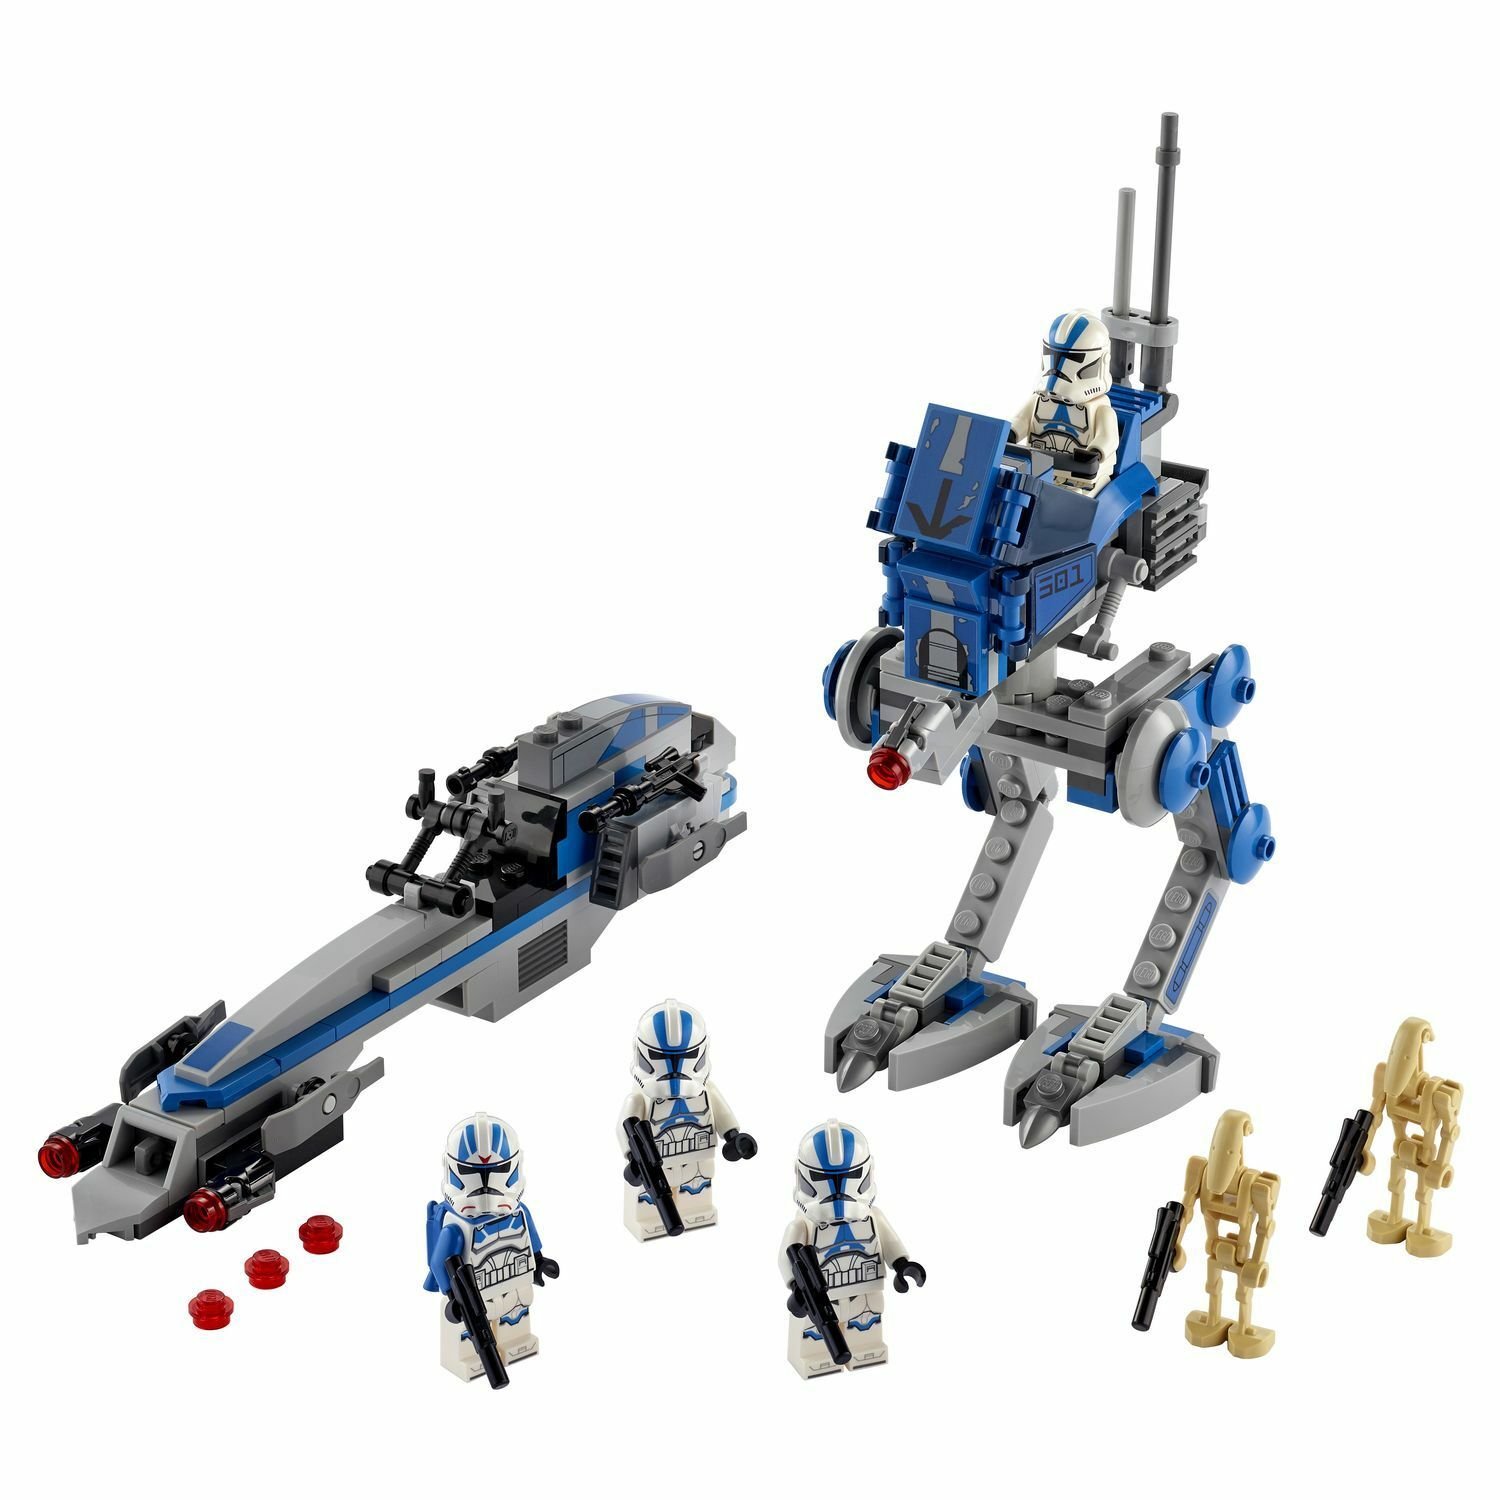 Lego Star Wars 75280 Клоны-пехотинцы 501-го легиона